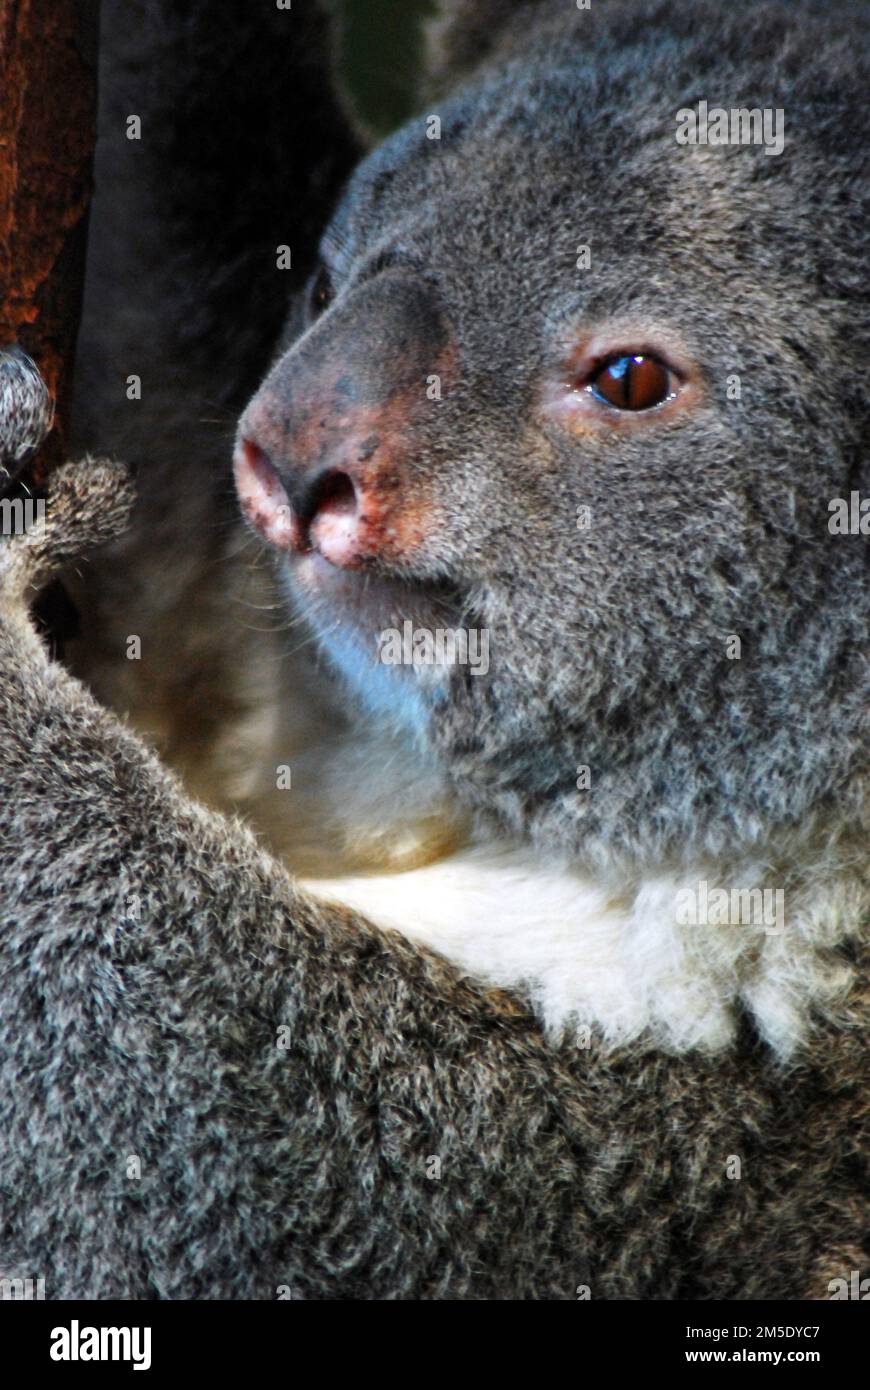 A close up of a koala’ bear's face, a native animal of Australia. Stock Photo